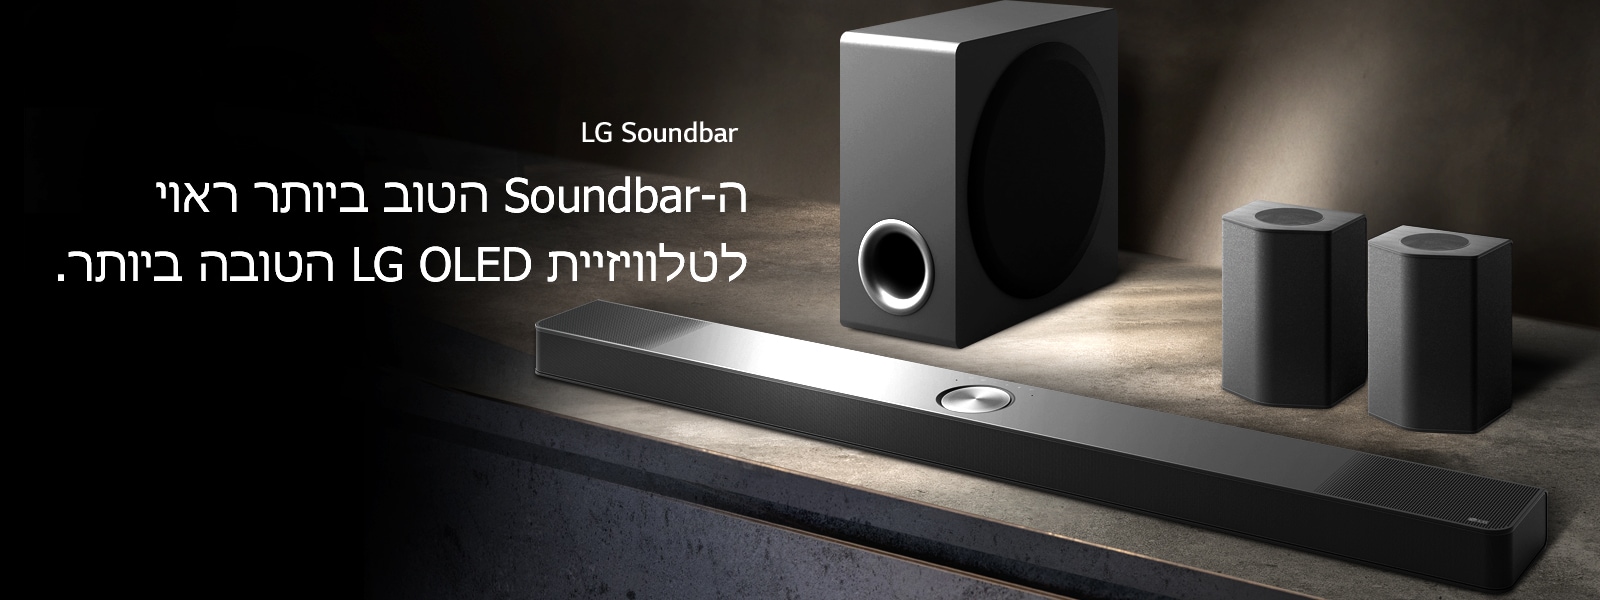 LG Soundbar, הרמקולים האחוריים והסאב-וופר ניצבים בפרספקטיבה זוויתית על מדף עץ חום בחדר שחור, מוחשך, עם אור מוטל רק על מערכת השמע.